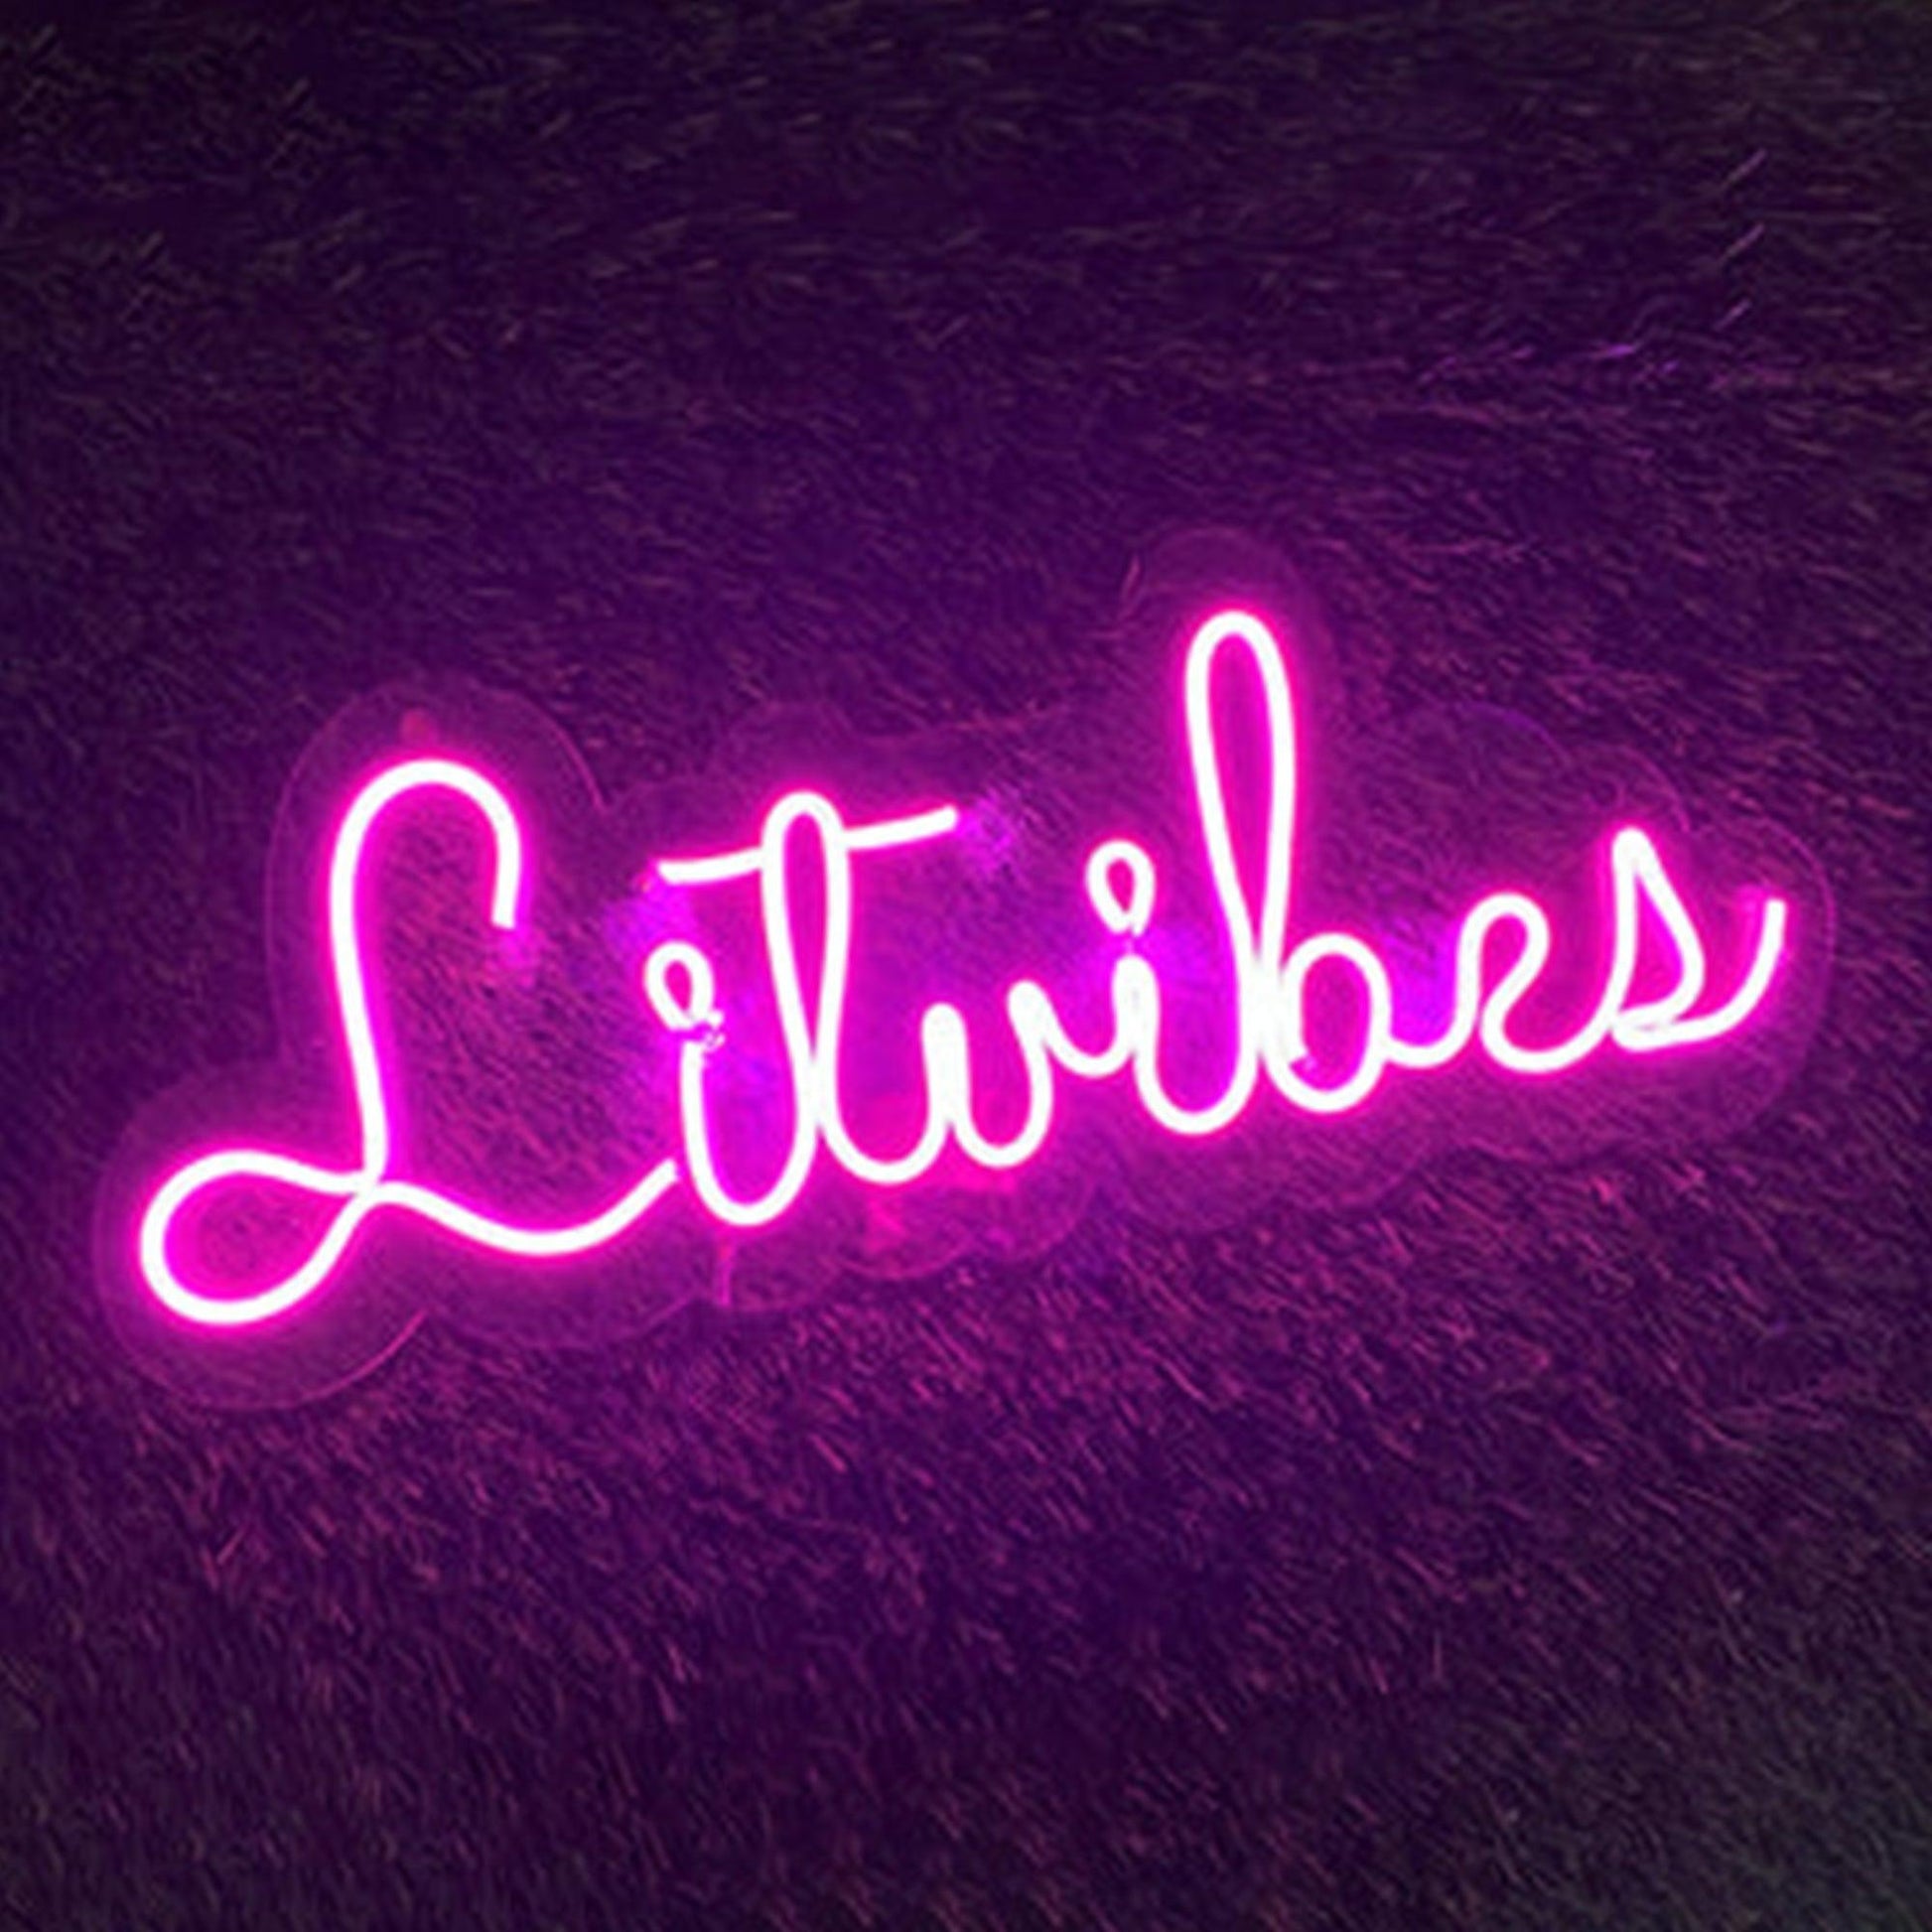 litvibes-neon-sign